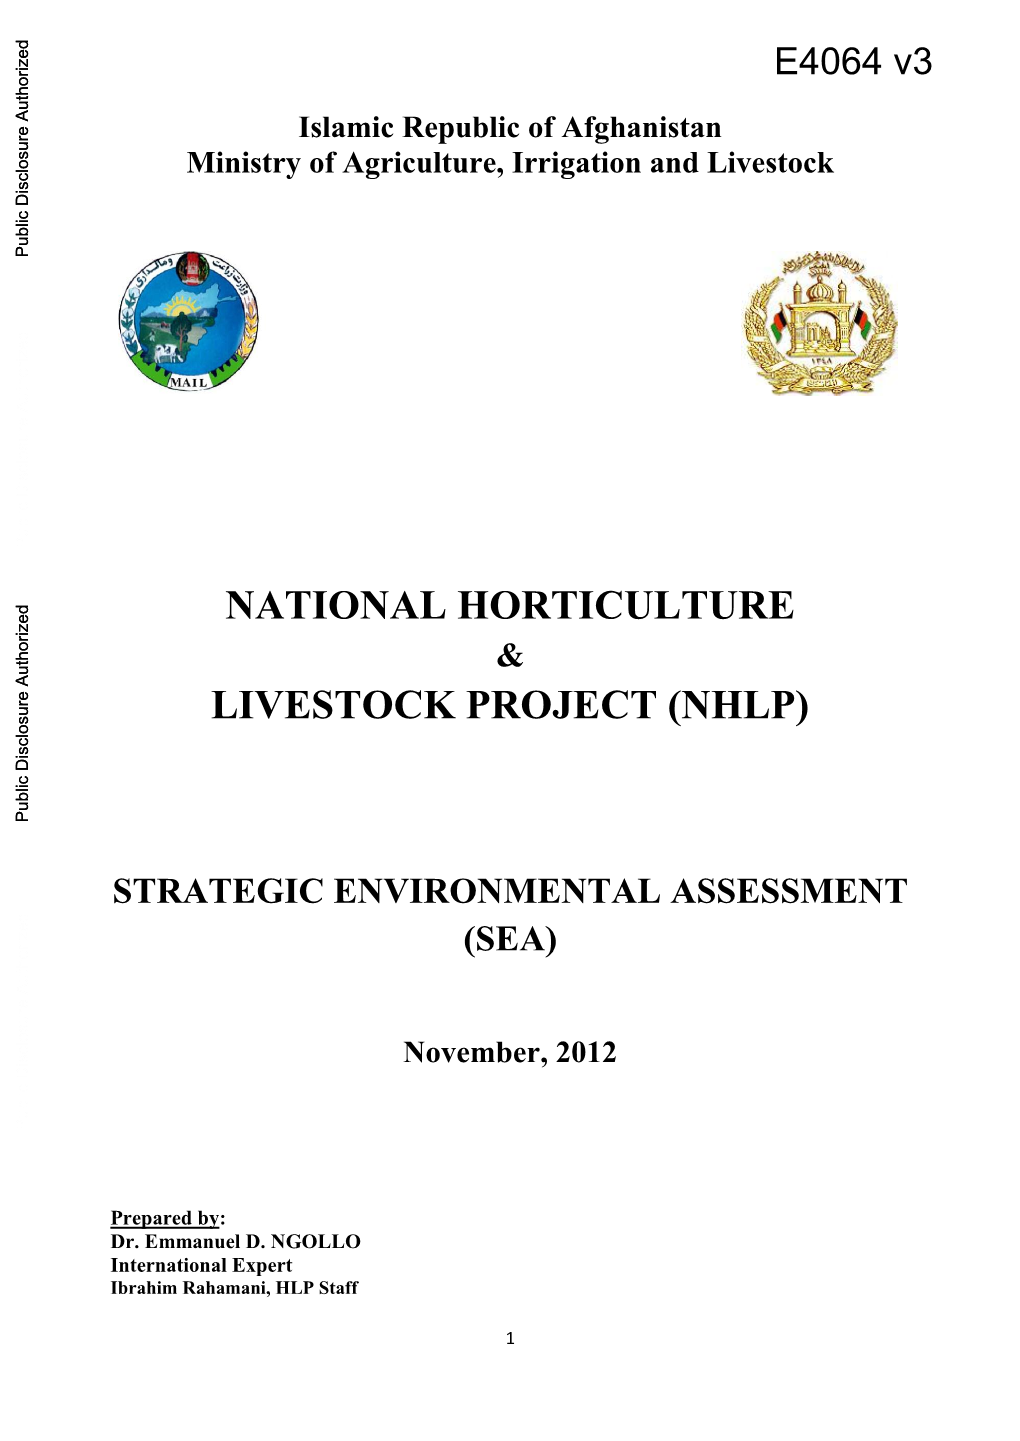 Strategic Environmental Assessment (Sea)